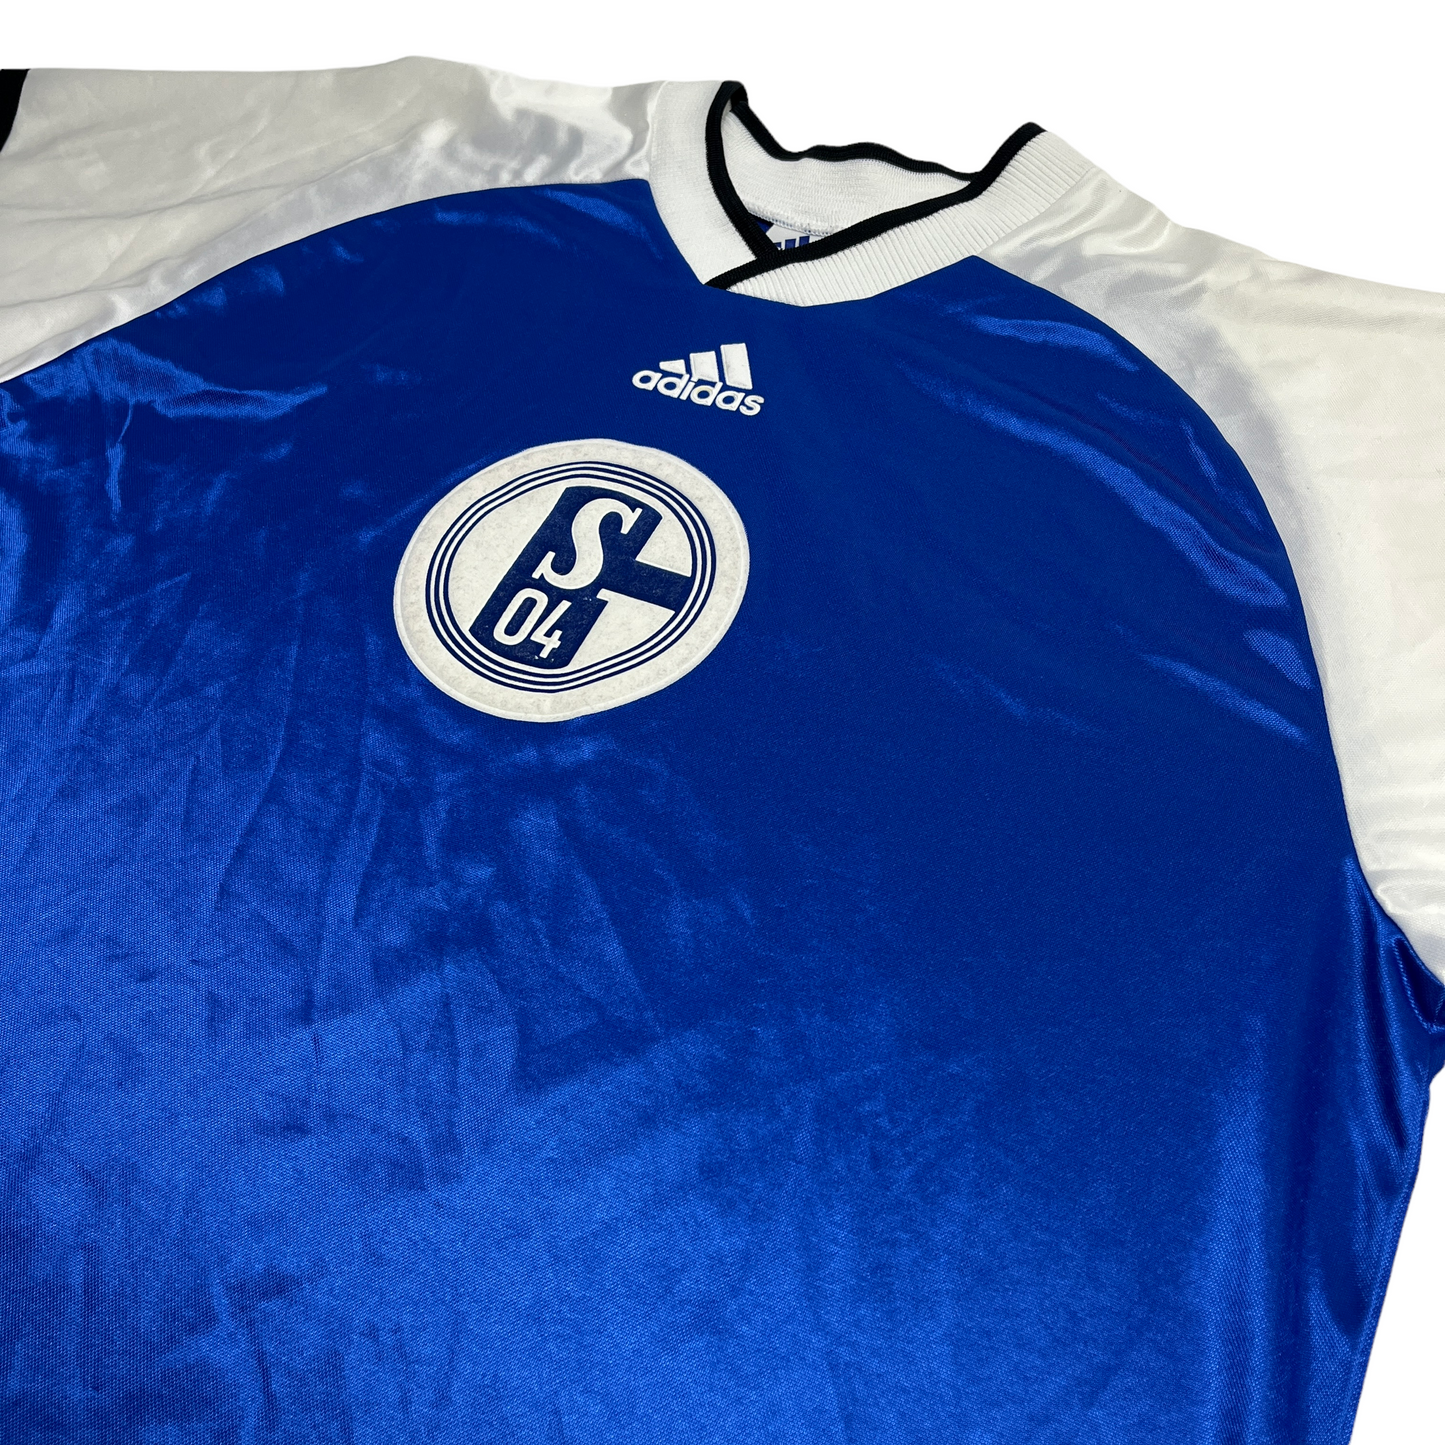 01281 Adidas Schalke 04 90s Training Jersey